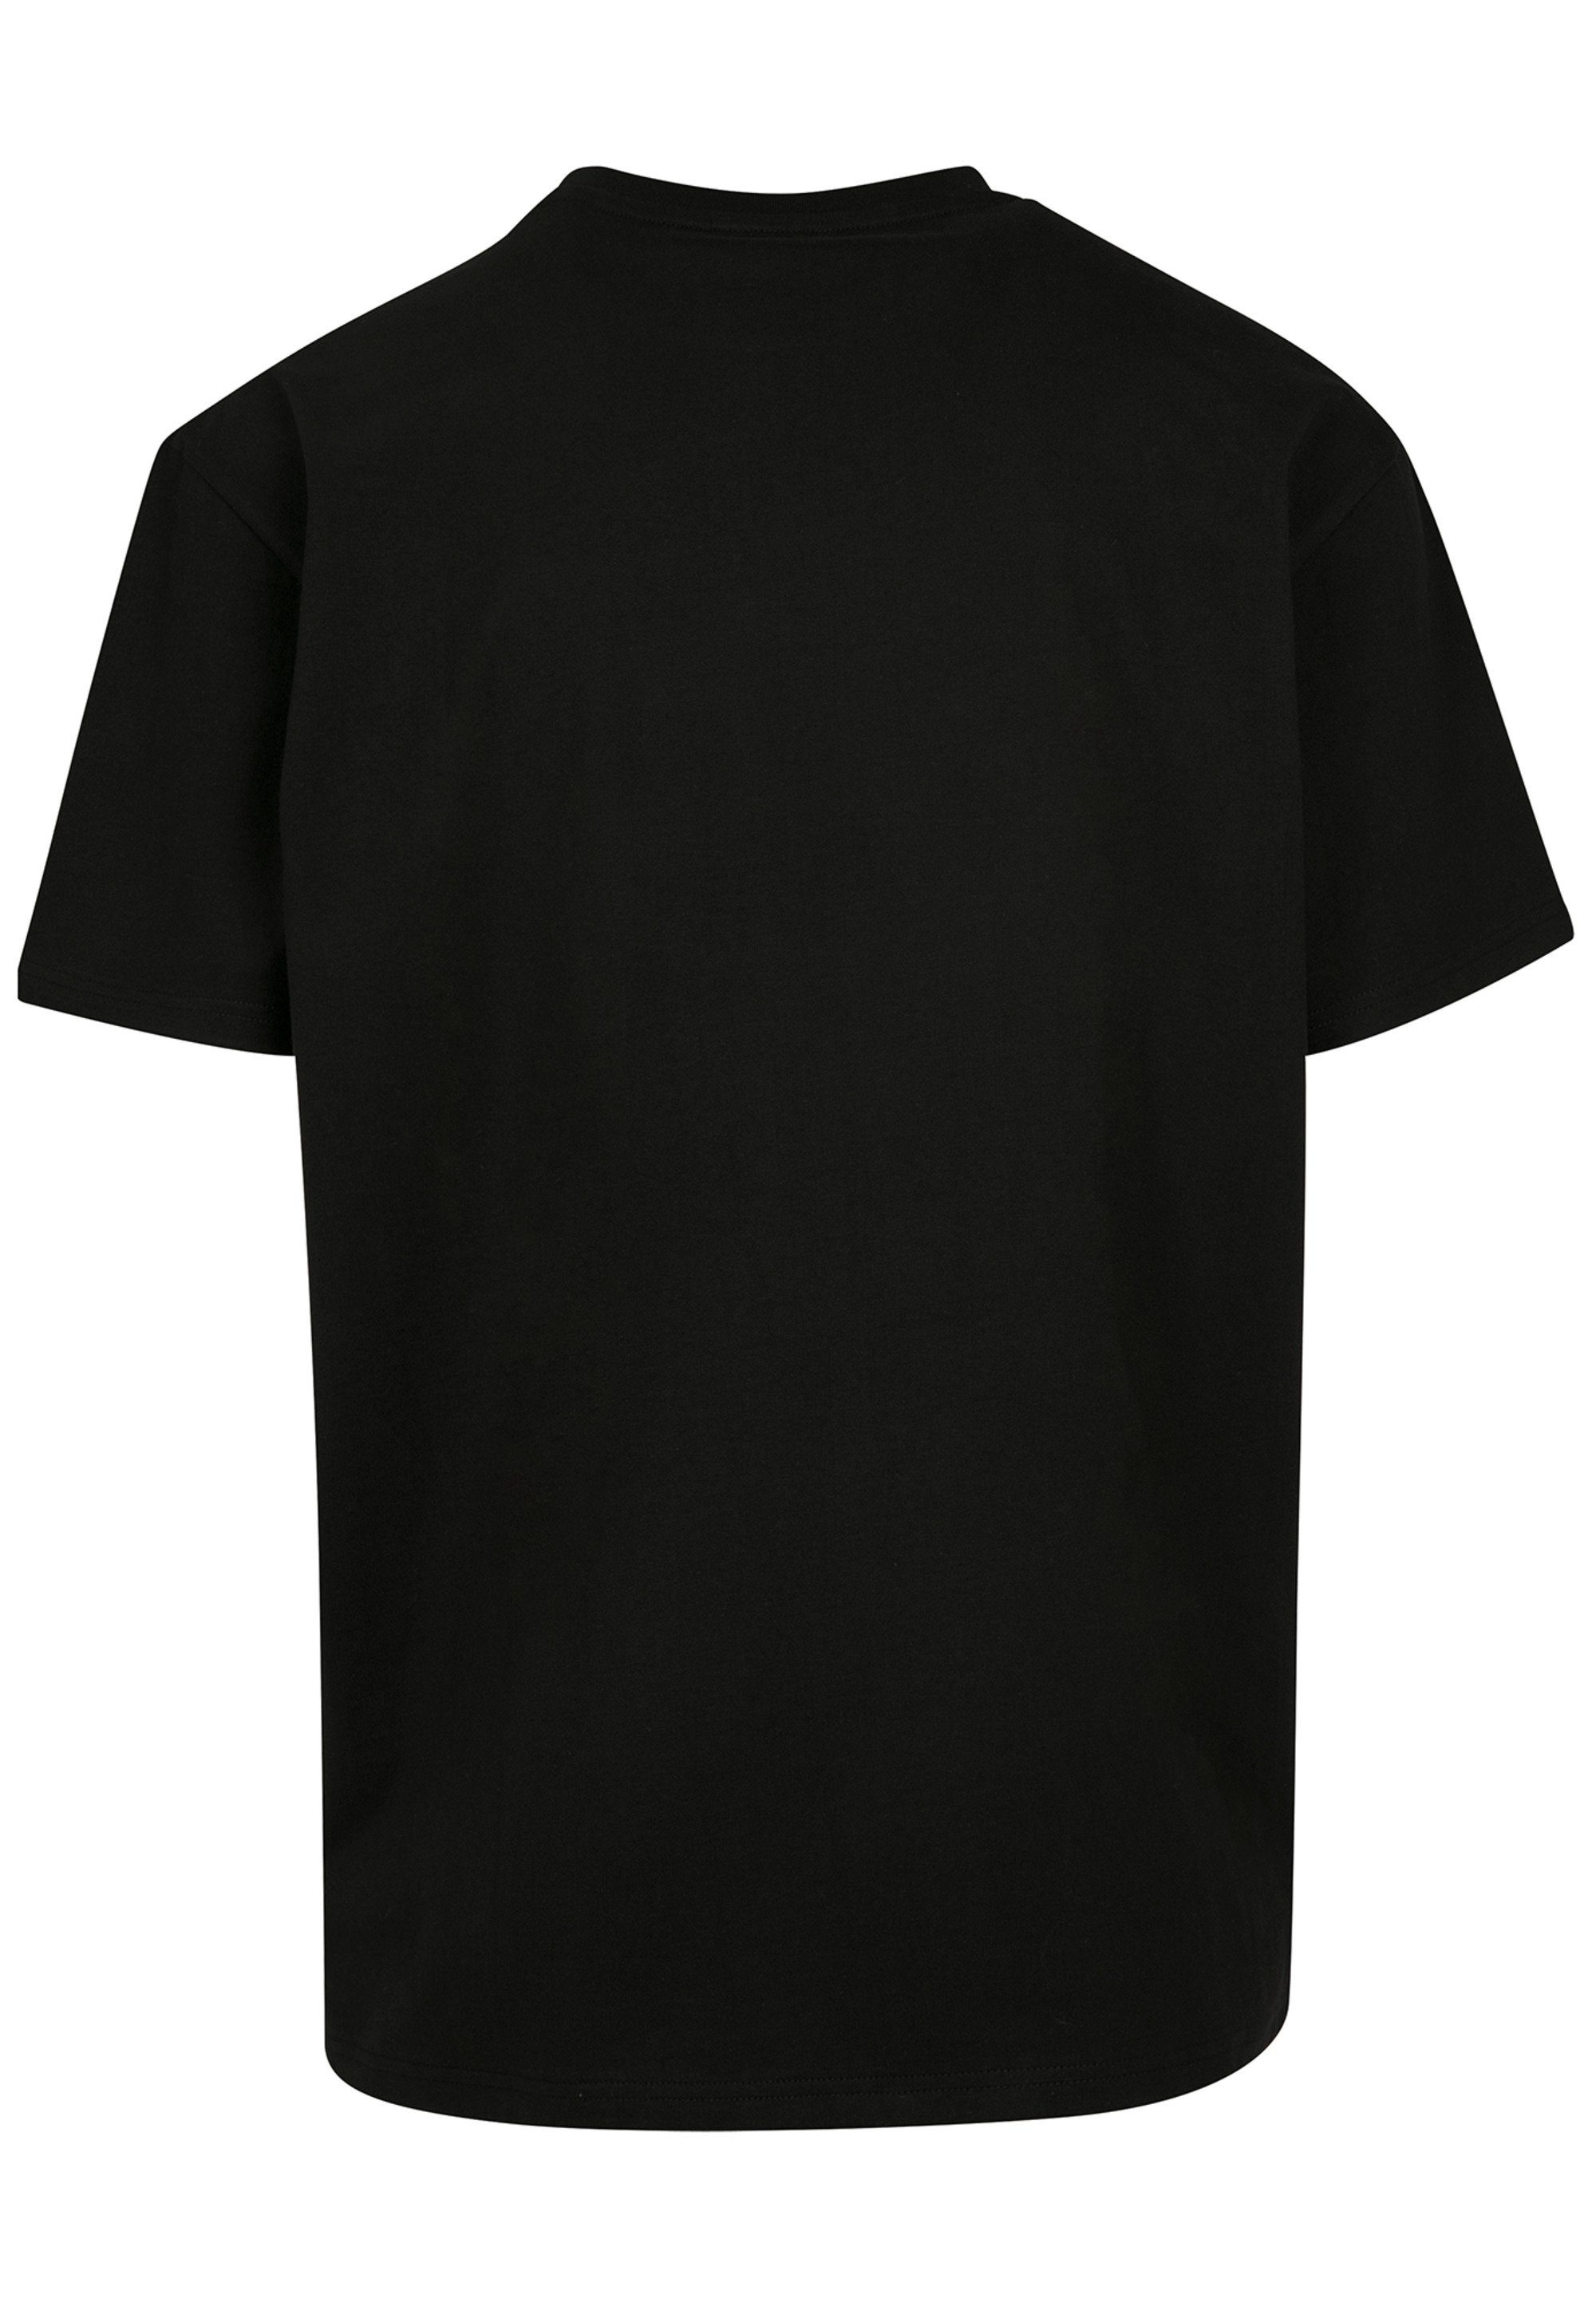 T-Shirt F4NT4STIC CYBERPUNK schwarz STYLES Cyberpunk Samurai Print